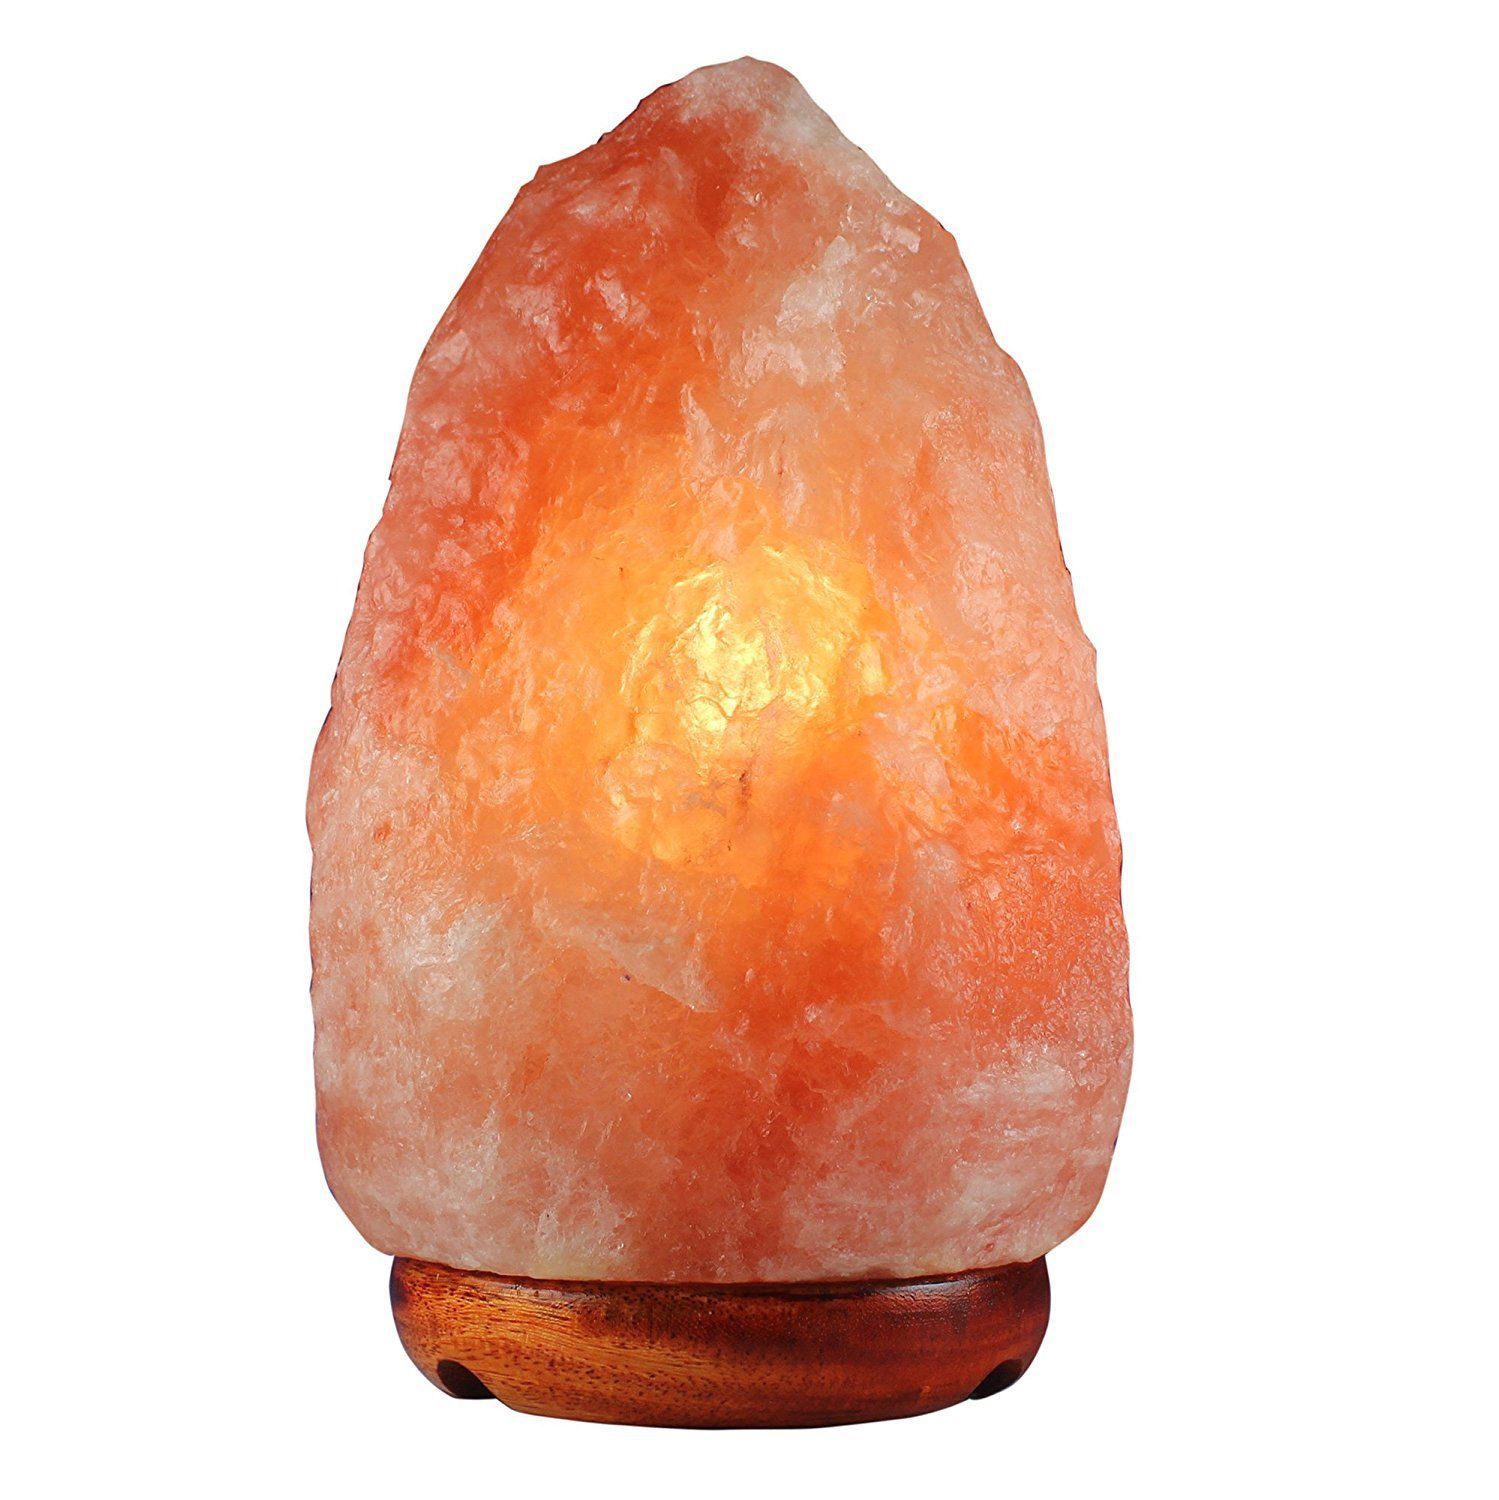 Today only: Salt Gems natural Himalayan salt lamp for $13, free shipping